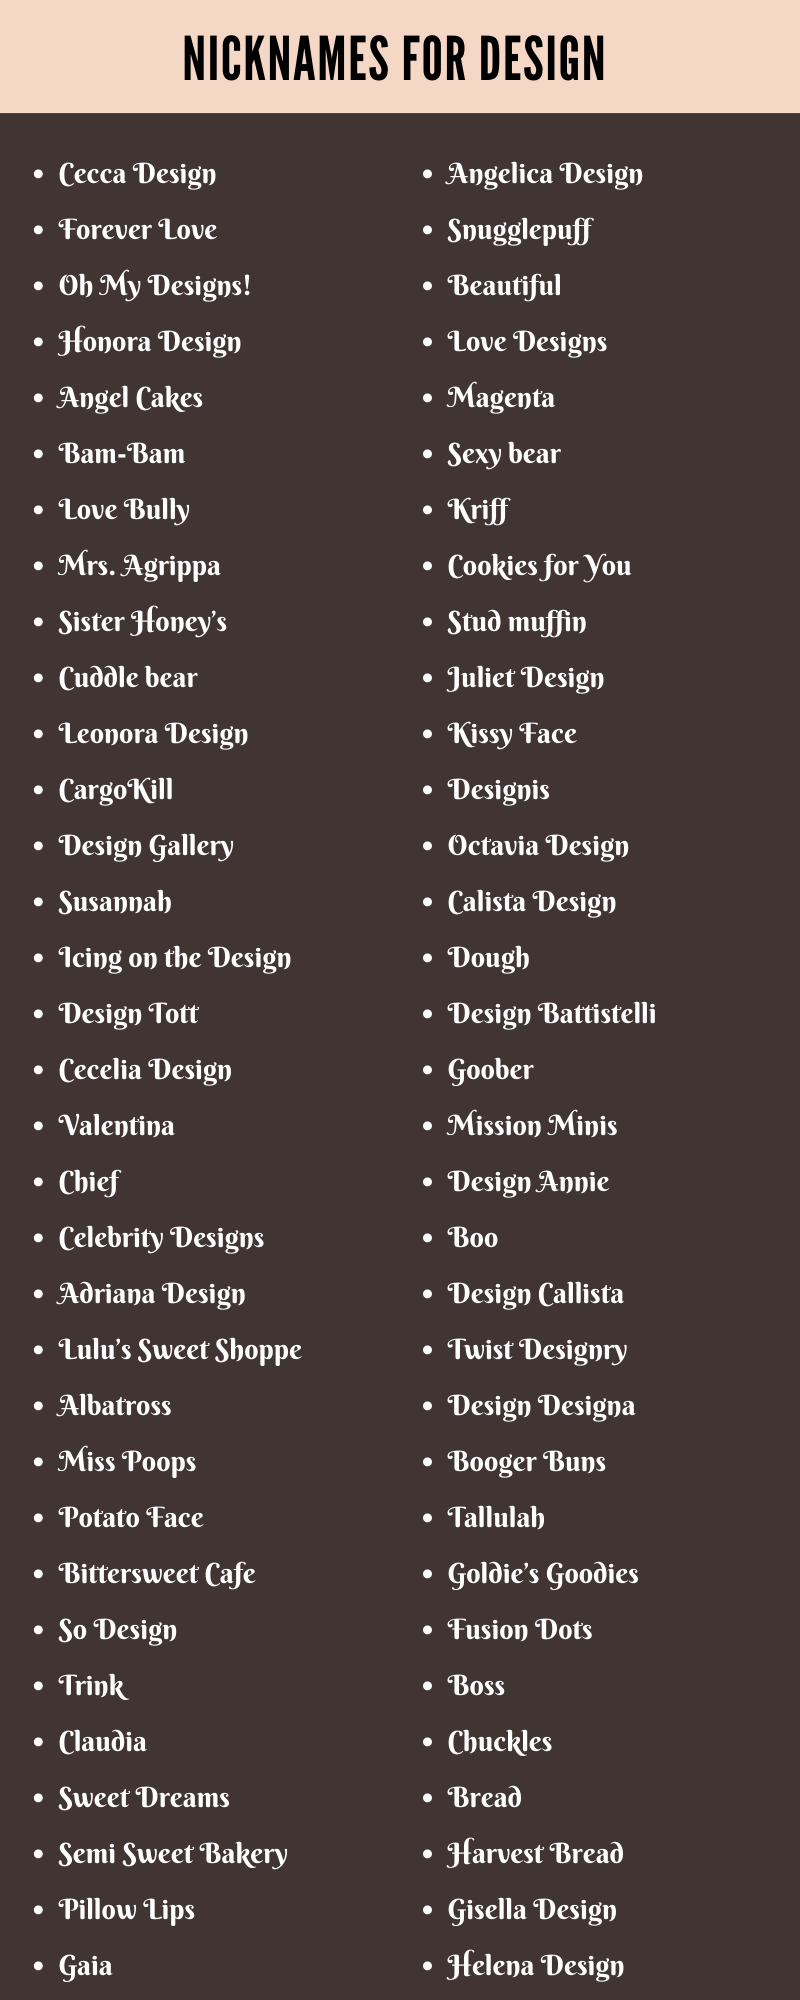 Nicknames for Design